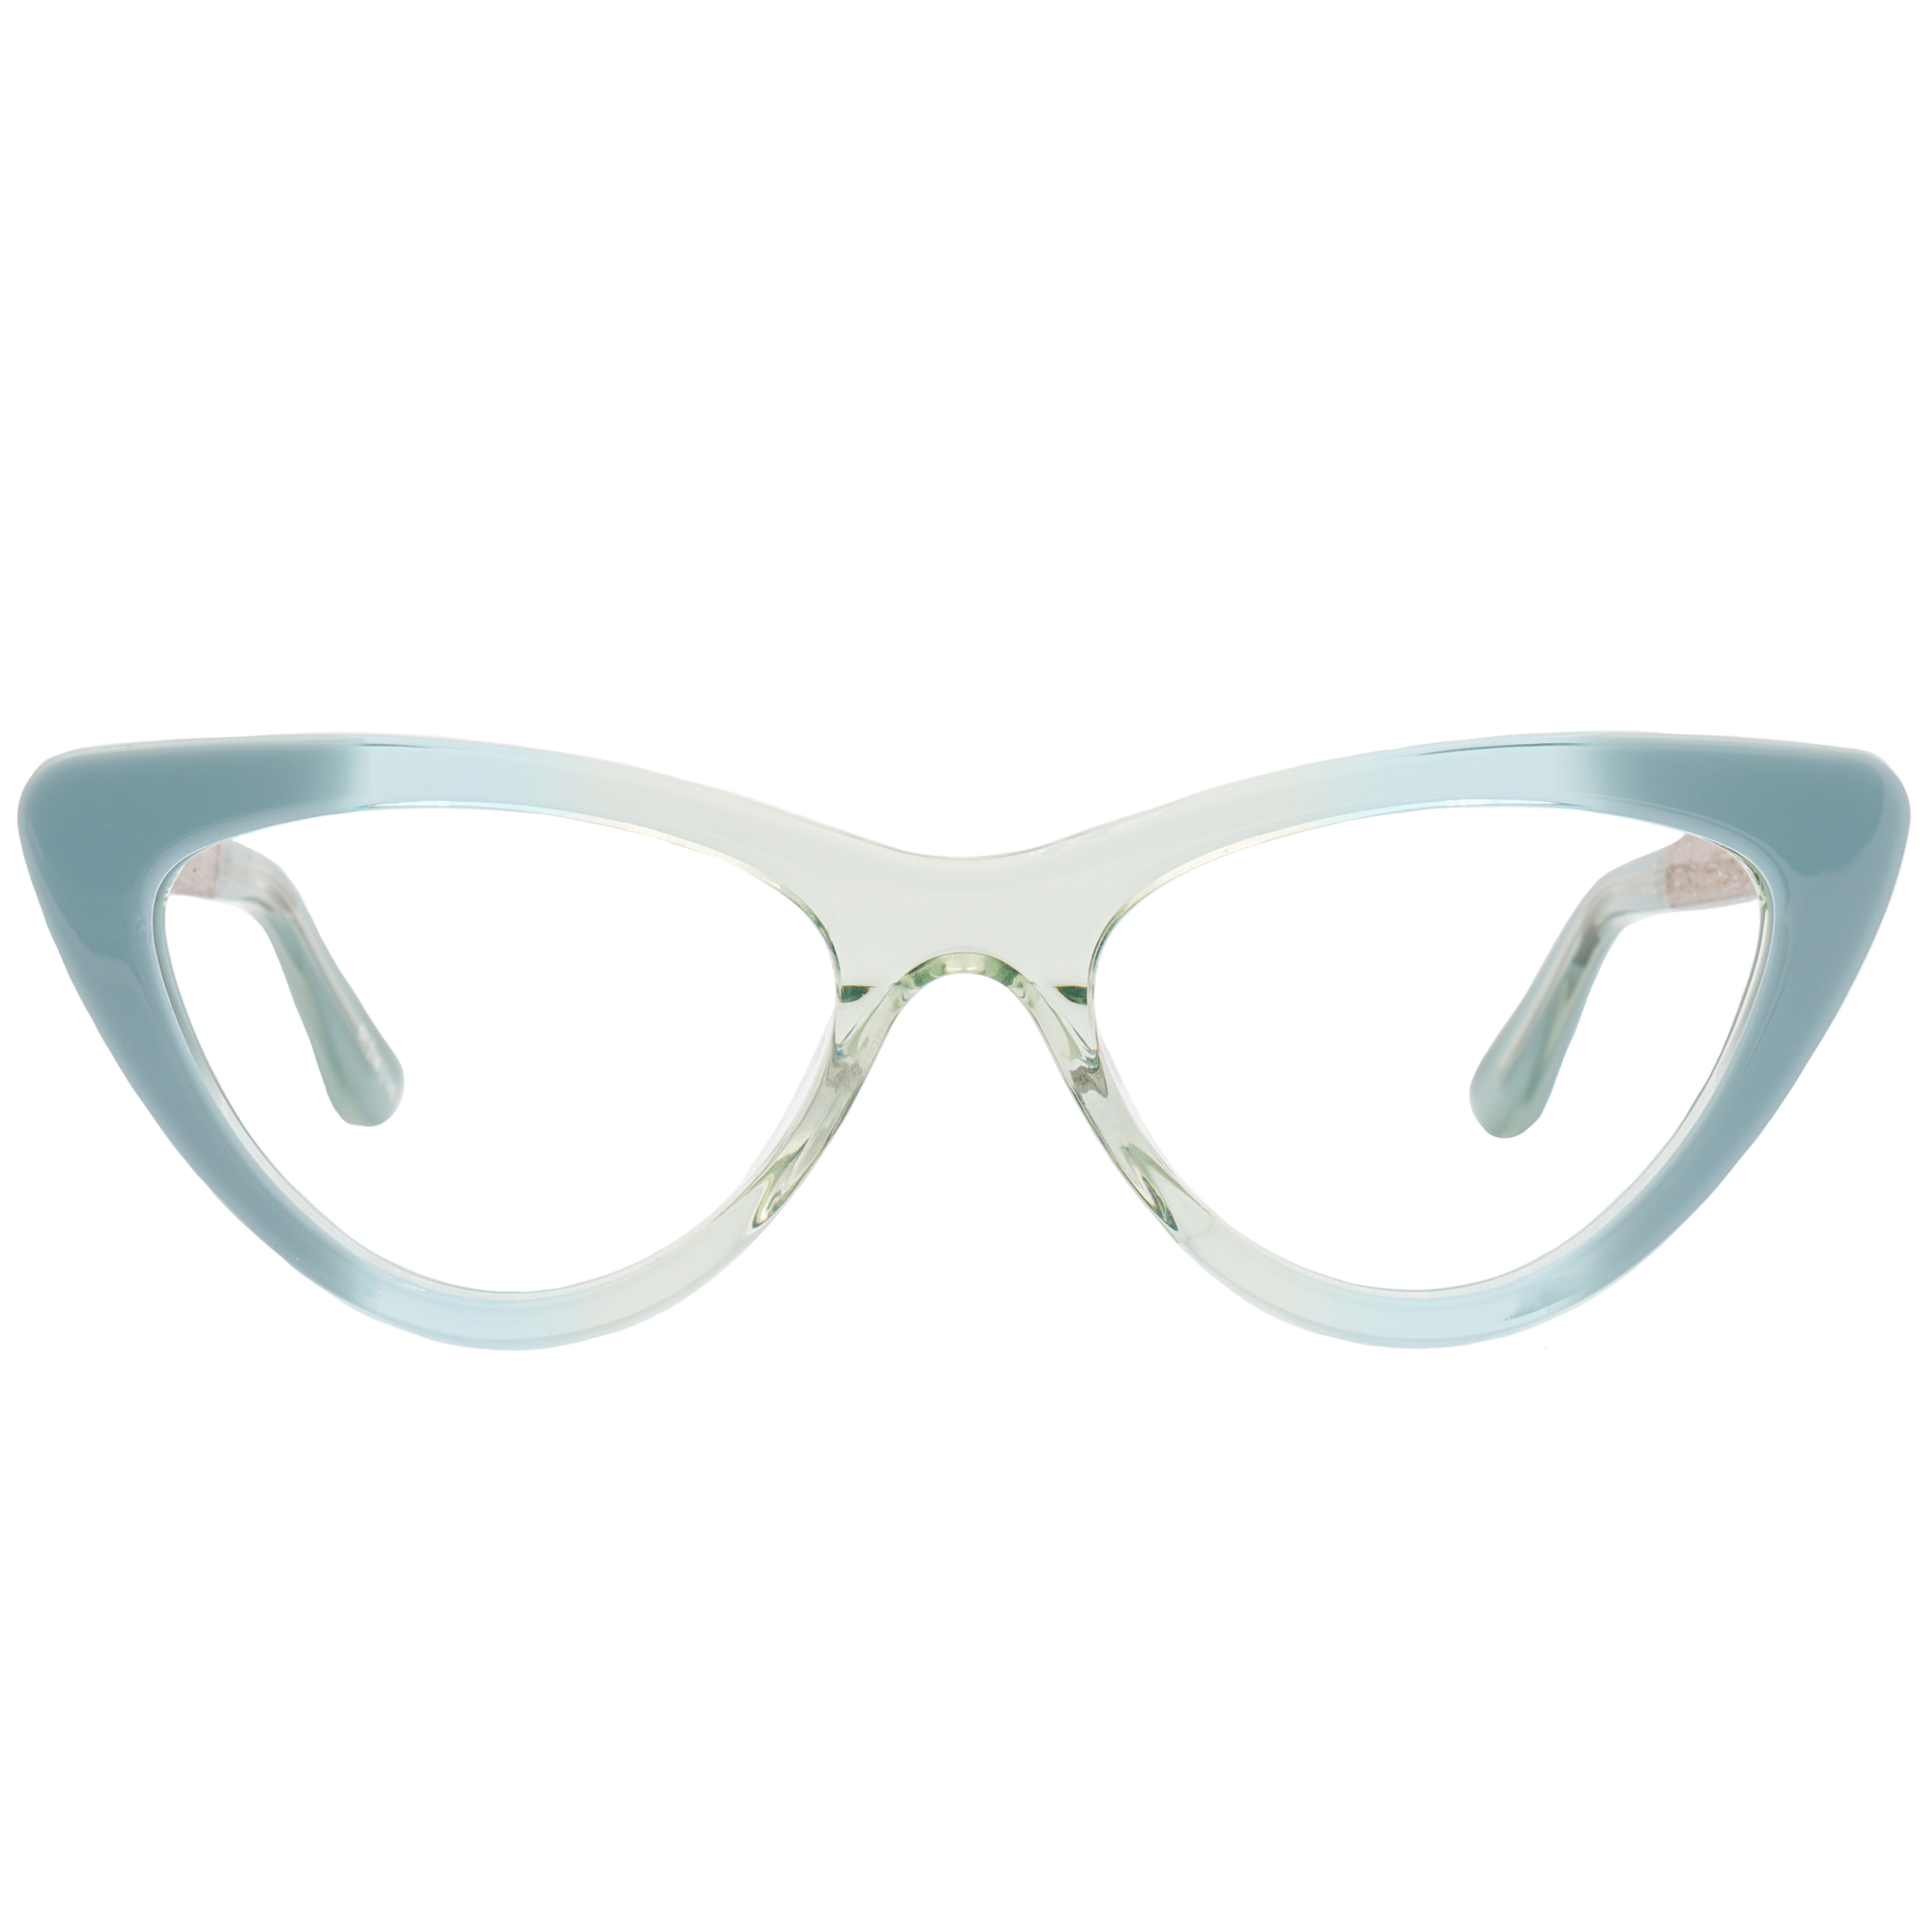 VISTA BLUGUARD - Blueberry Mint - Blue Light Glasses - Johnny Fly Eyewear 